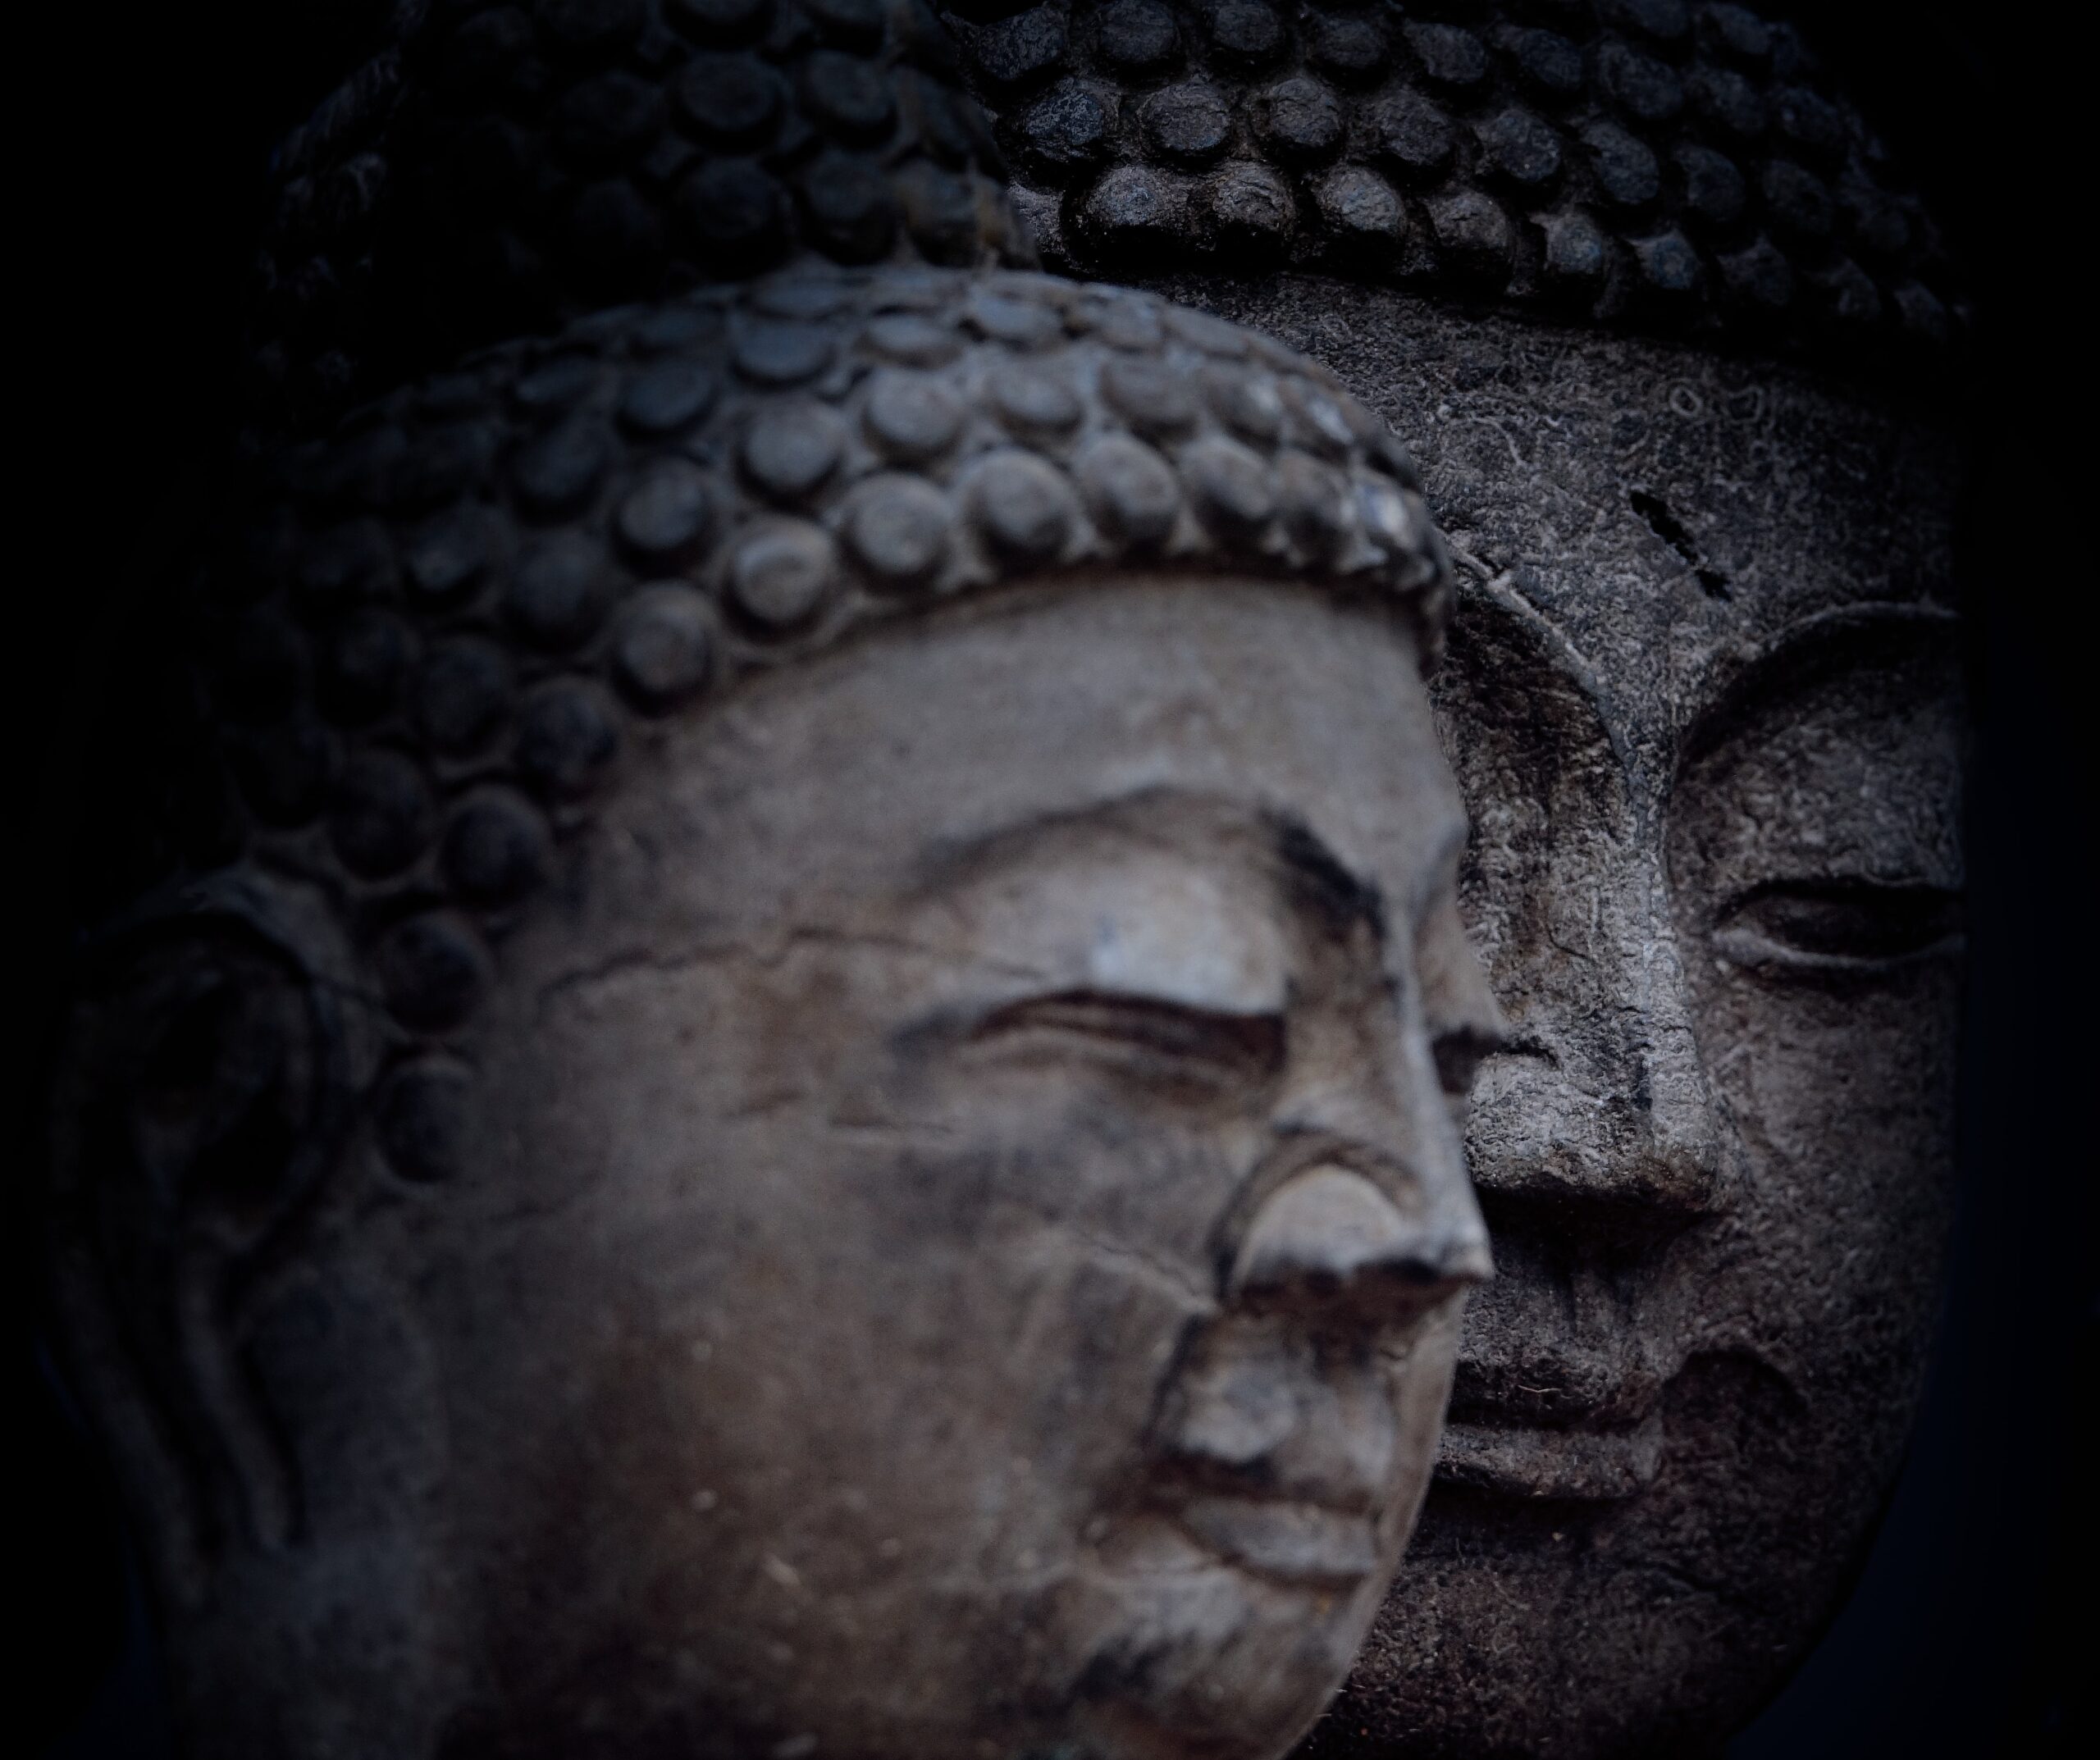 davidcohen-Grey Buddha heads 2-unsplash